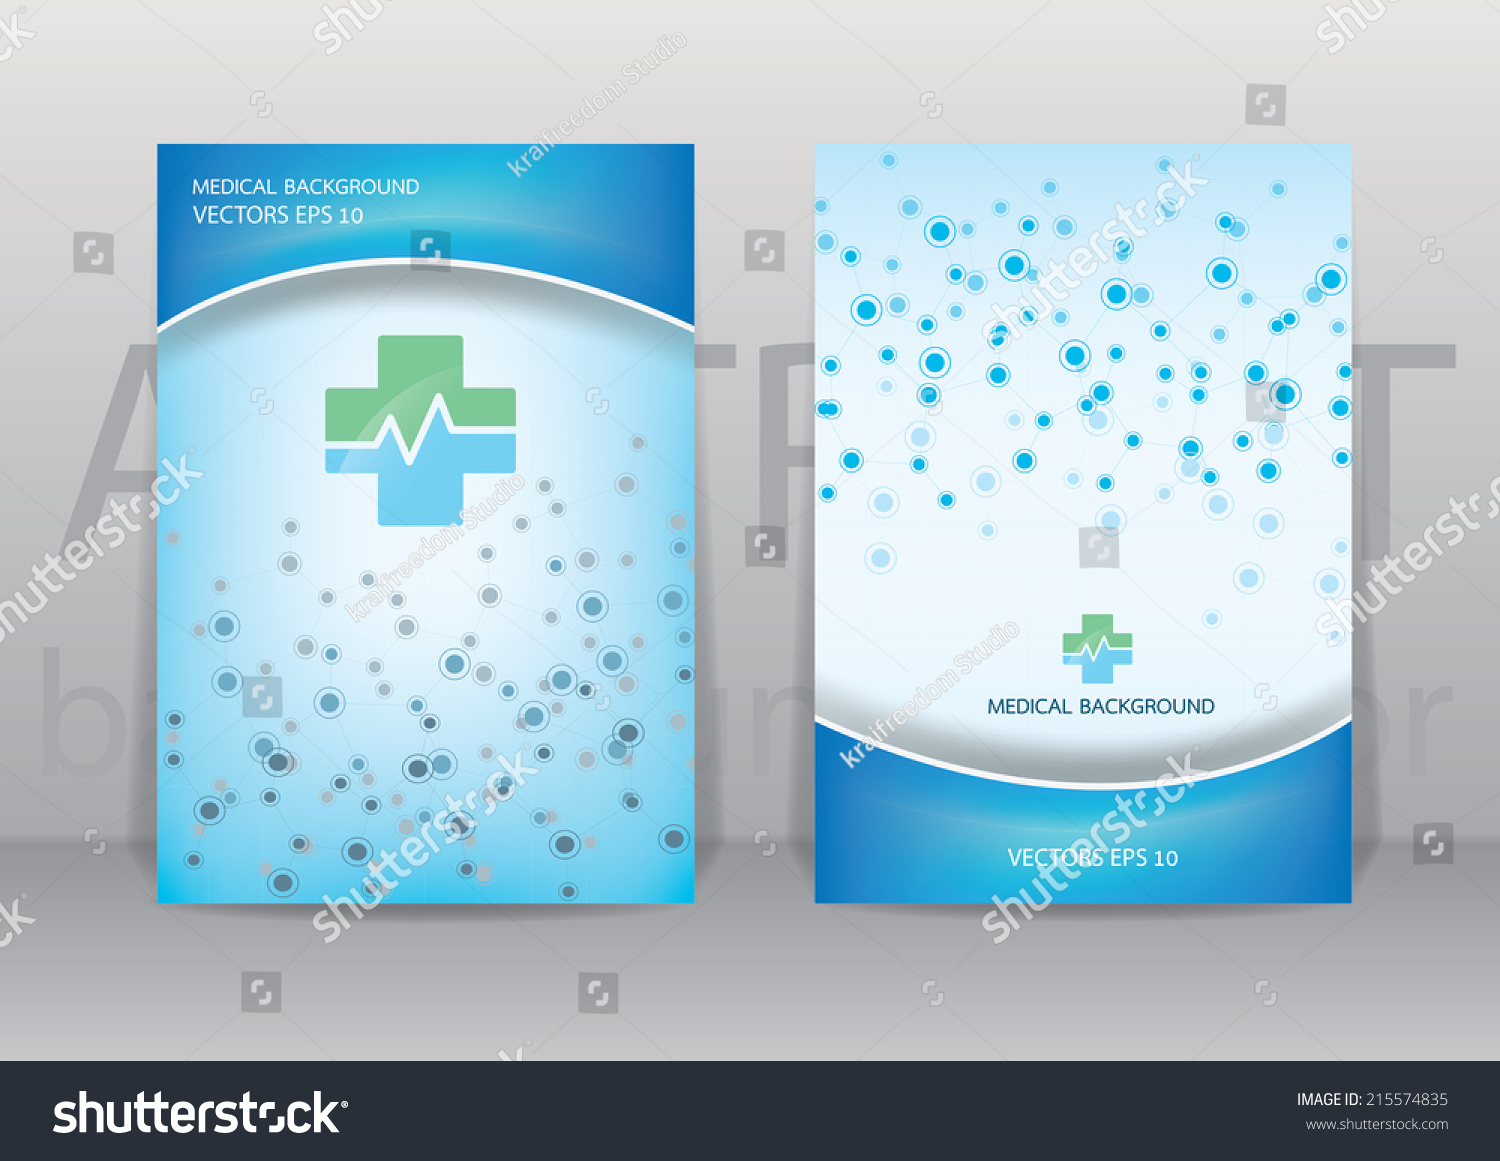 Medical Background Vector Stock Vector 215574835 Shutterstock